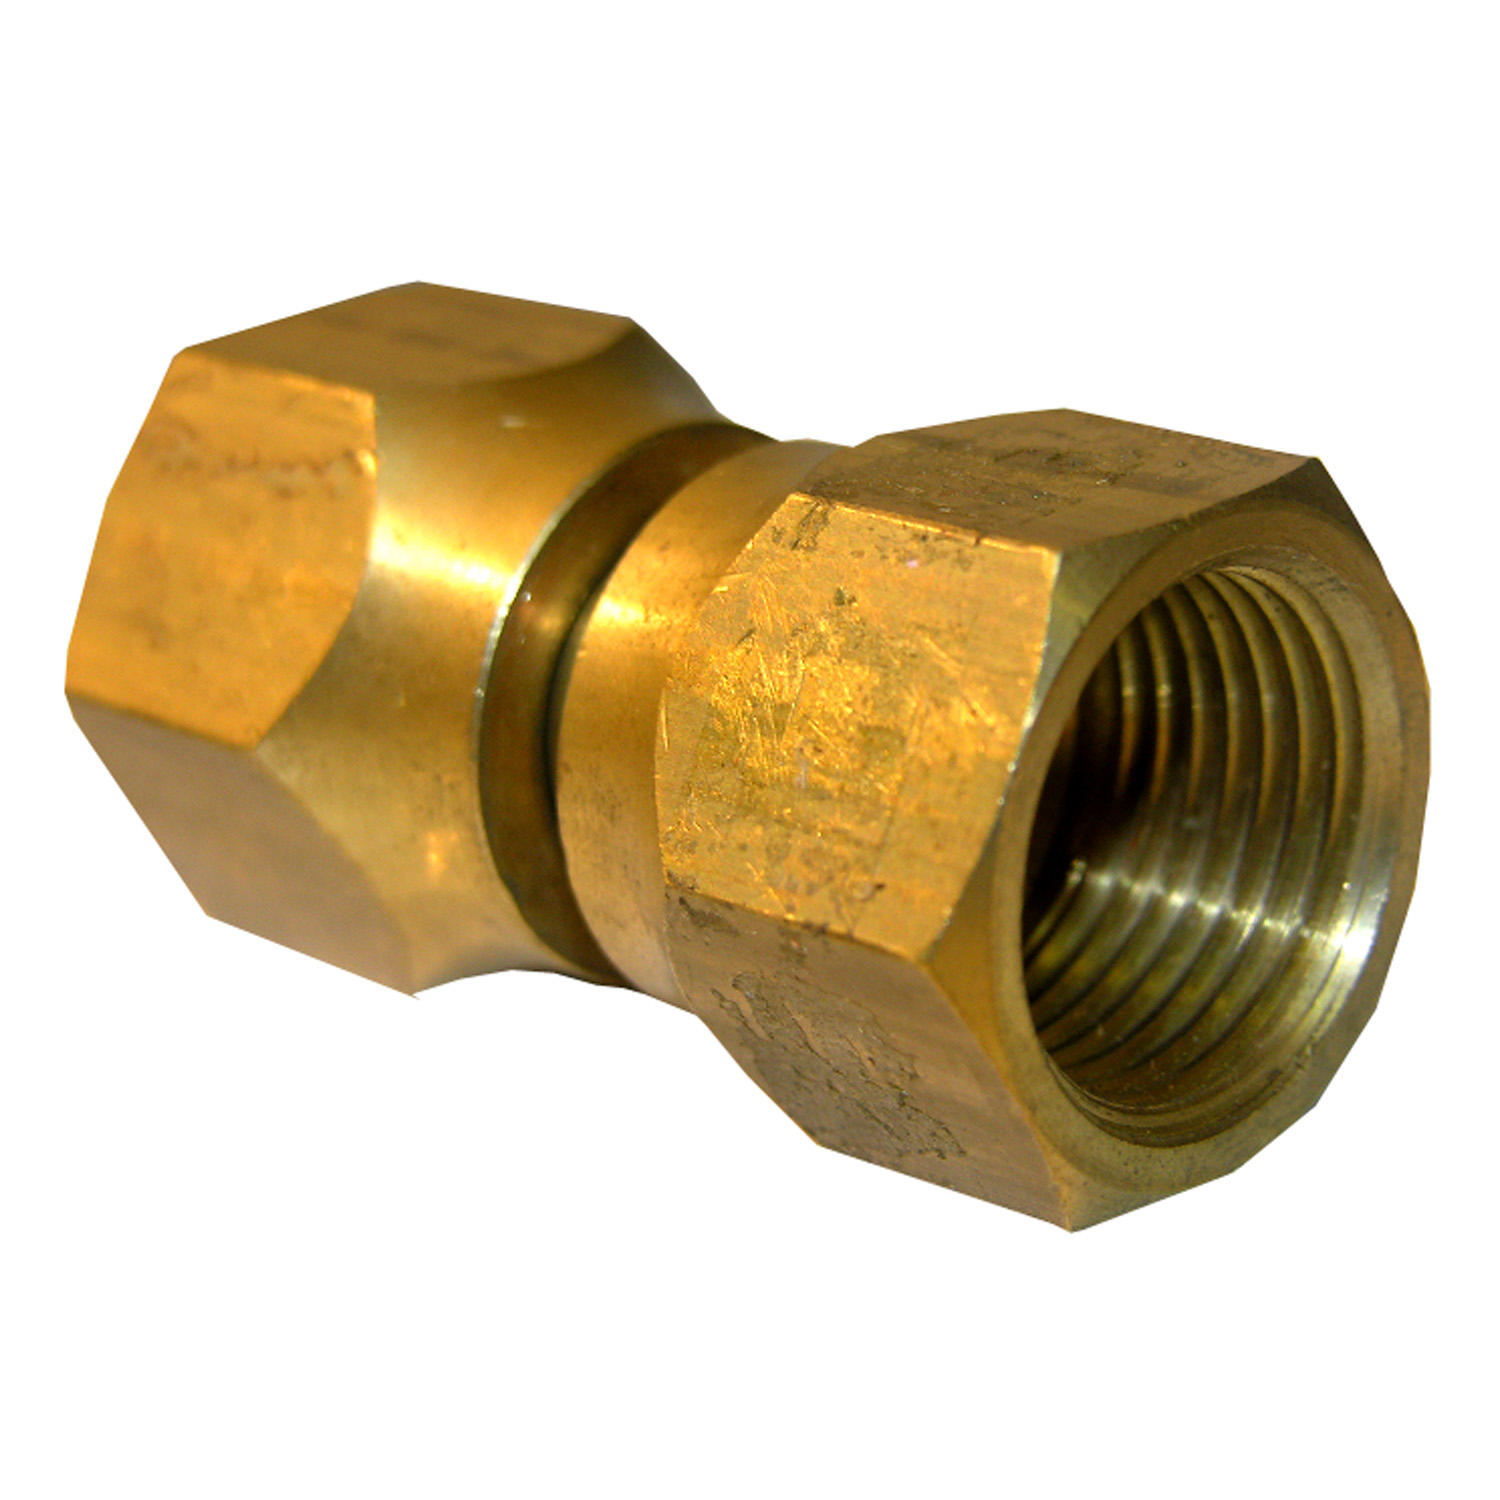 Lasco 17-5957 Swivel Pipe Union, 5/8 in, Female Flare, Brass